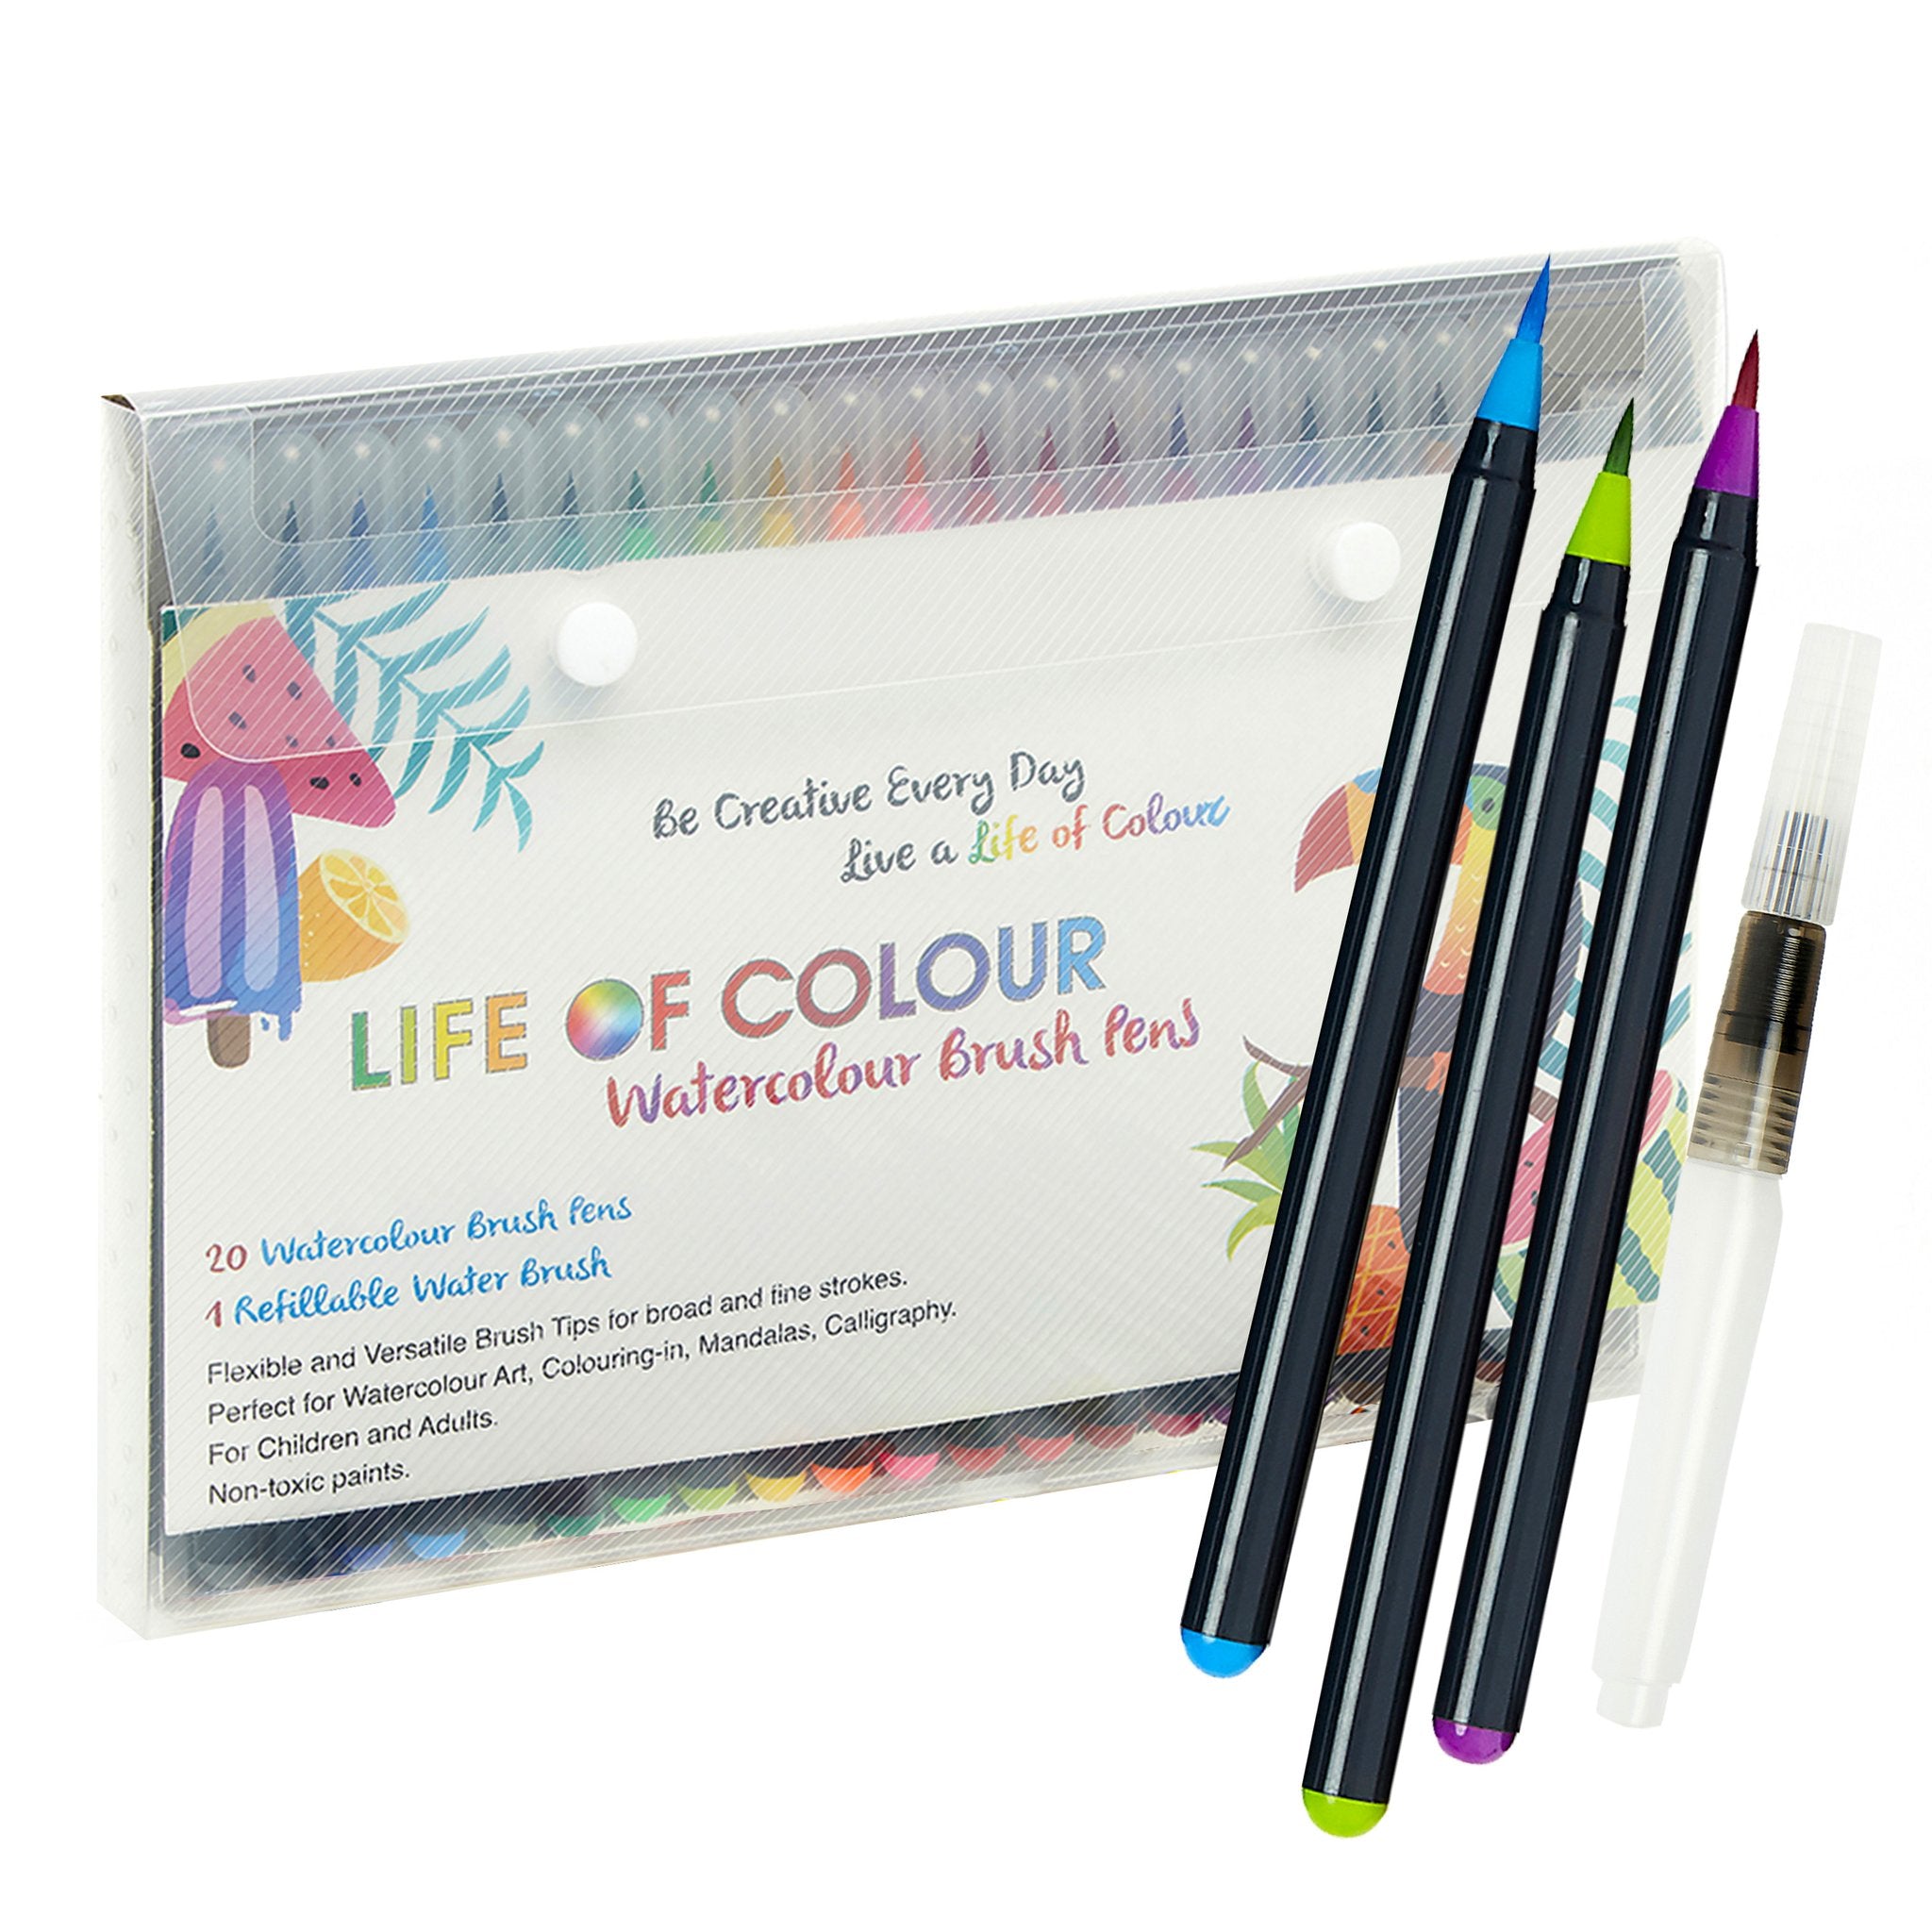 Watercolour Brush Pens Set